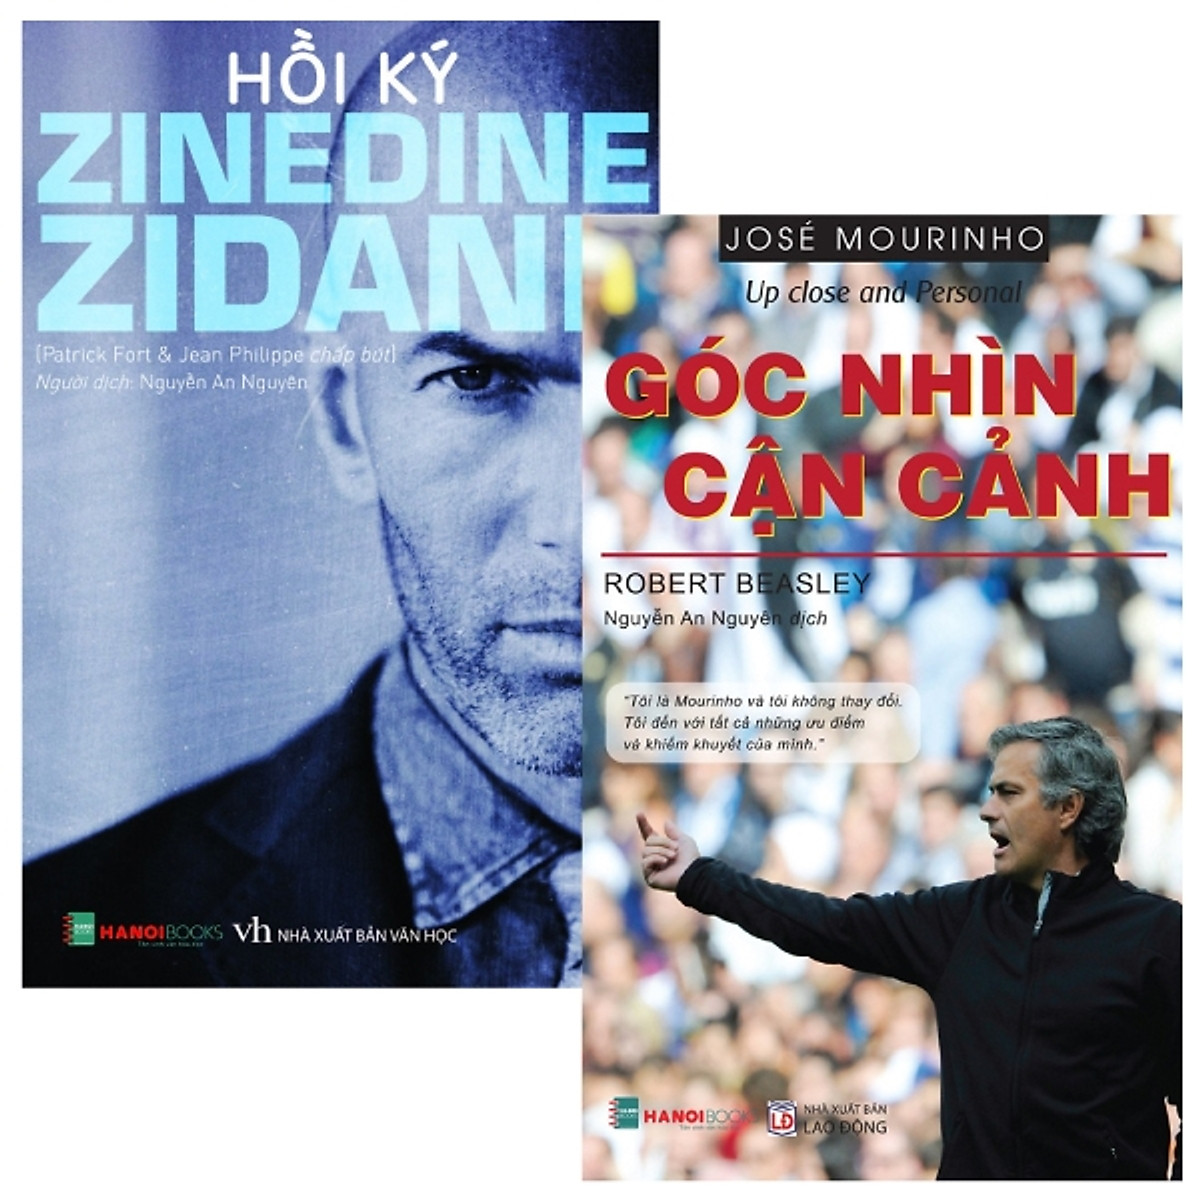 Combo Hồi kí Zinedine Zidane + Jose Mourinho - Góc nhìn cận cảnh (Bộ 2 Cuốn)